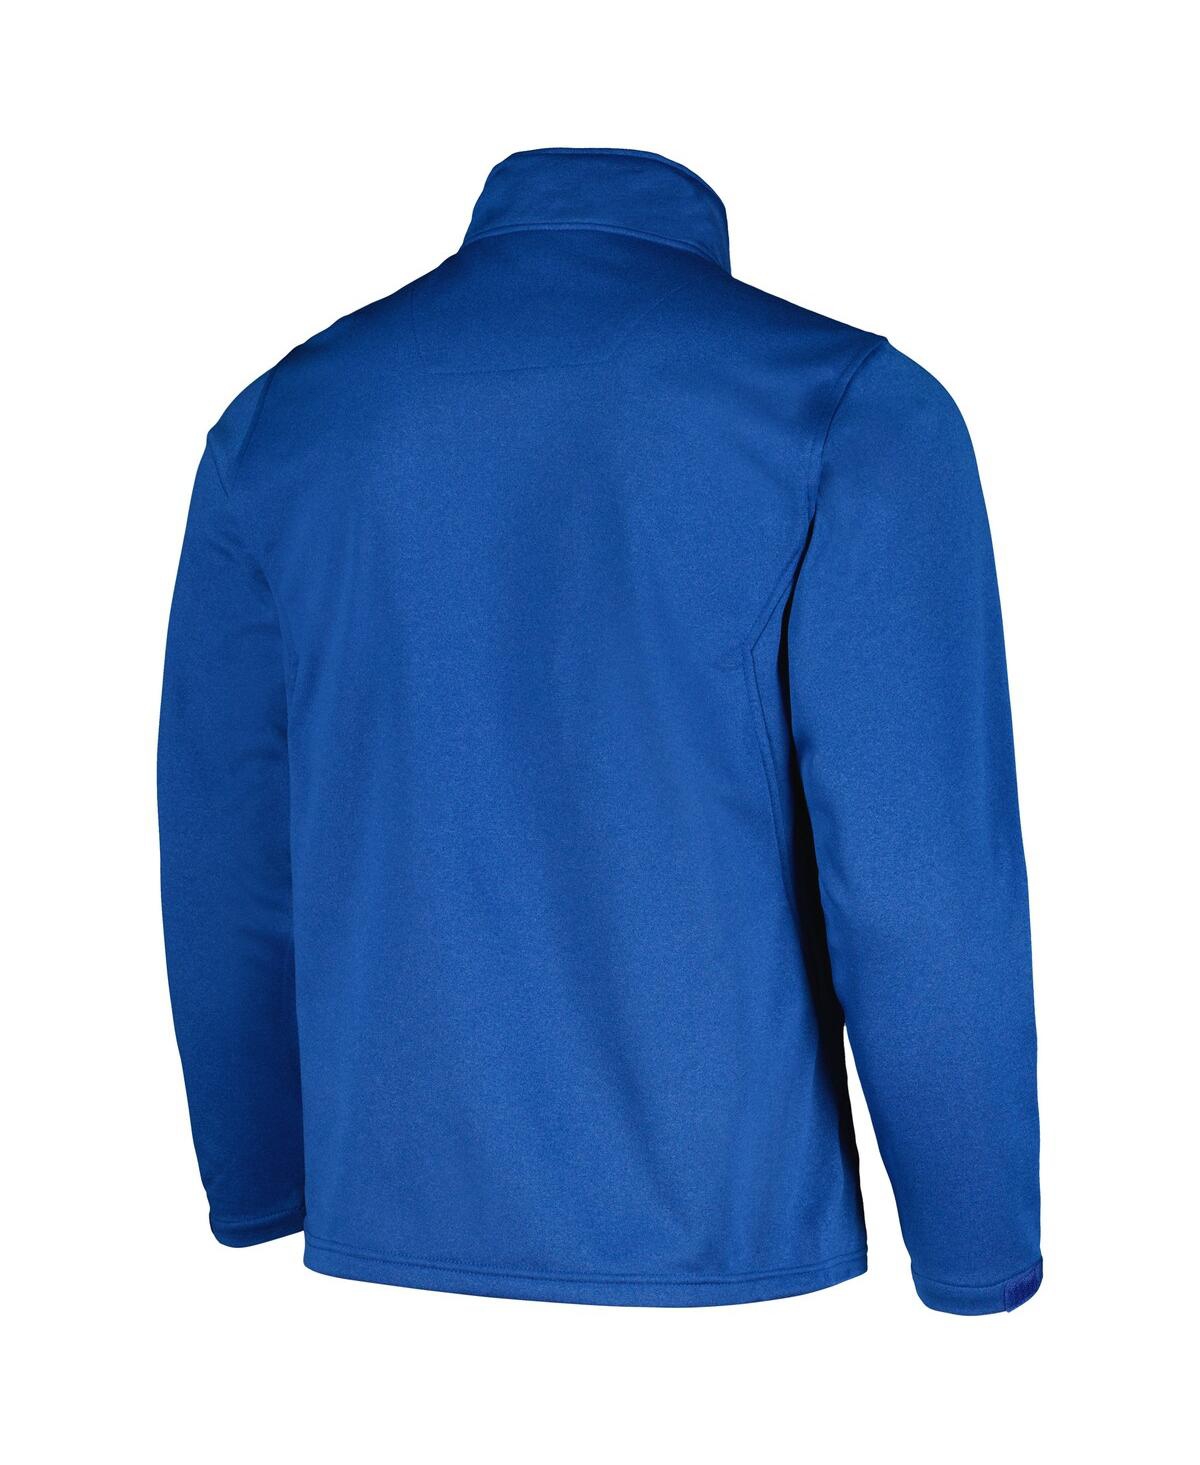 Shop Dunbrooke Men's  Heather Royal Toronto Blue Jays Explorer Full-zip Jacket